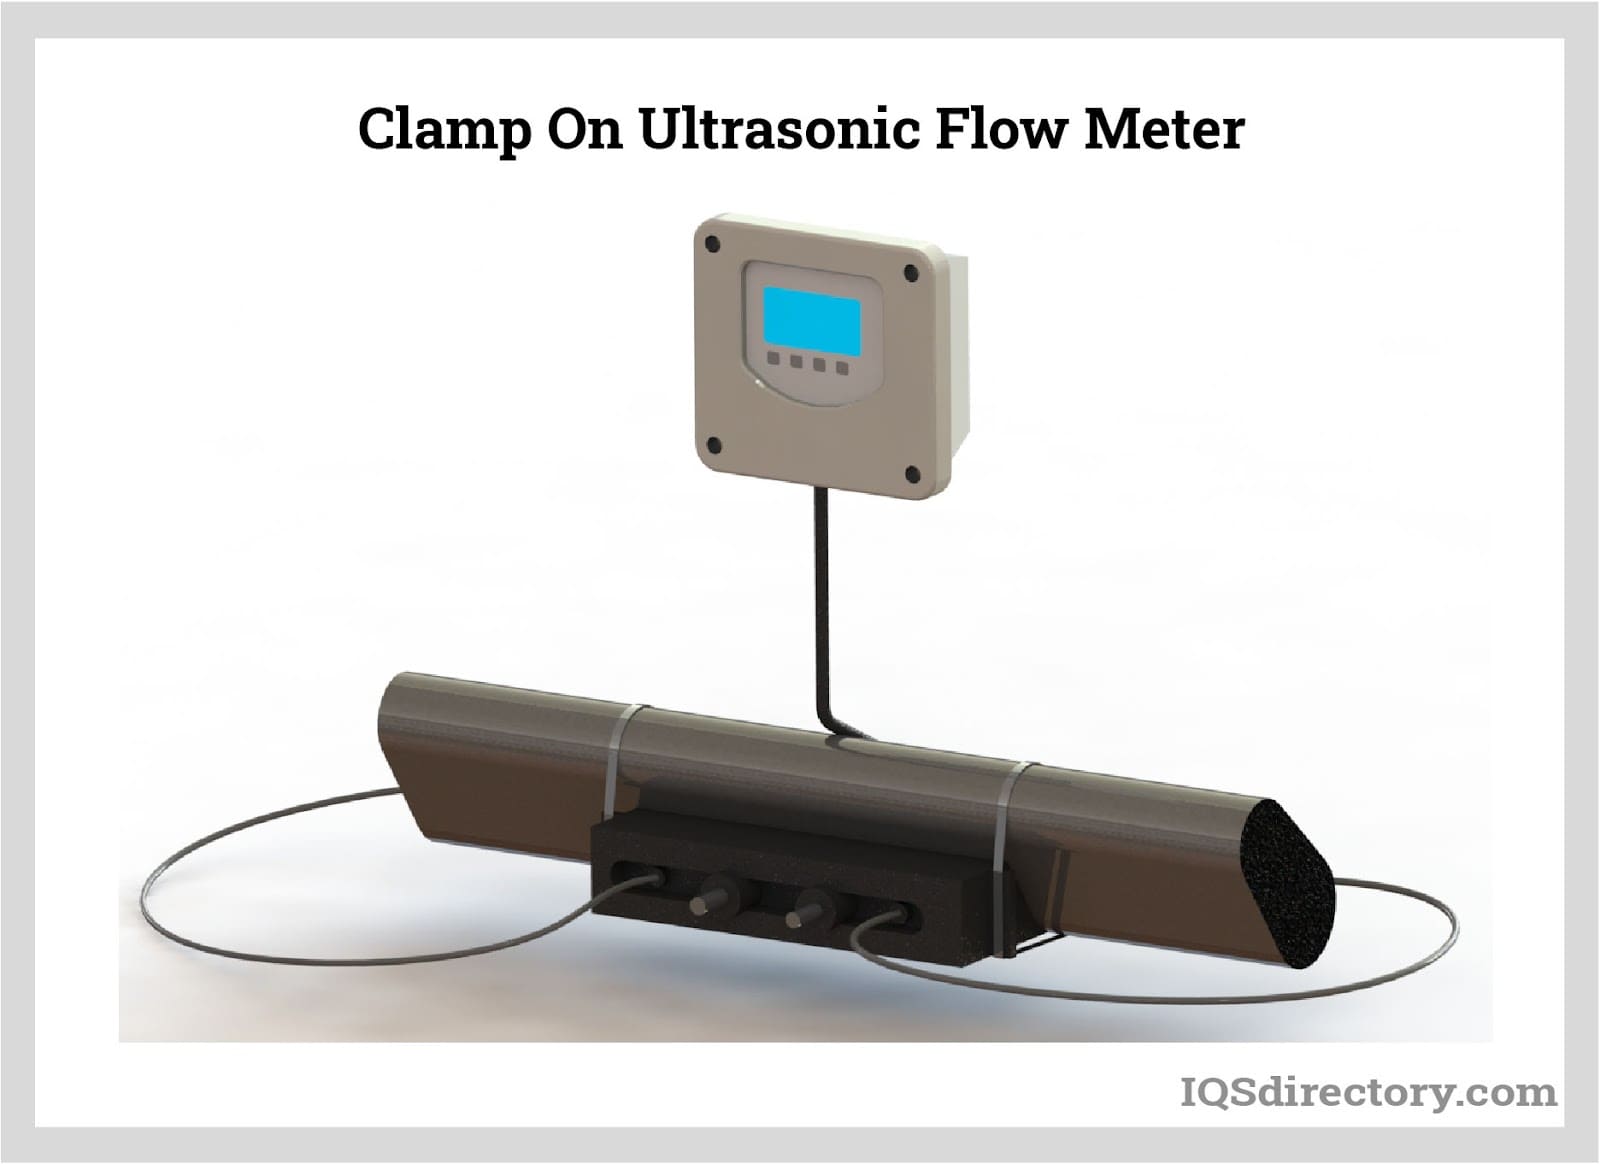 Clamp On Ultrasonic Flow Meter